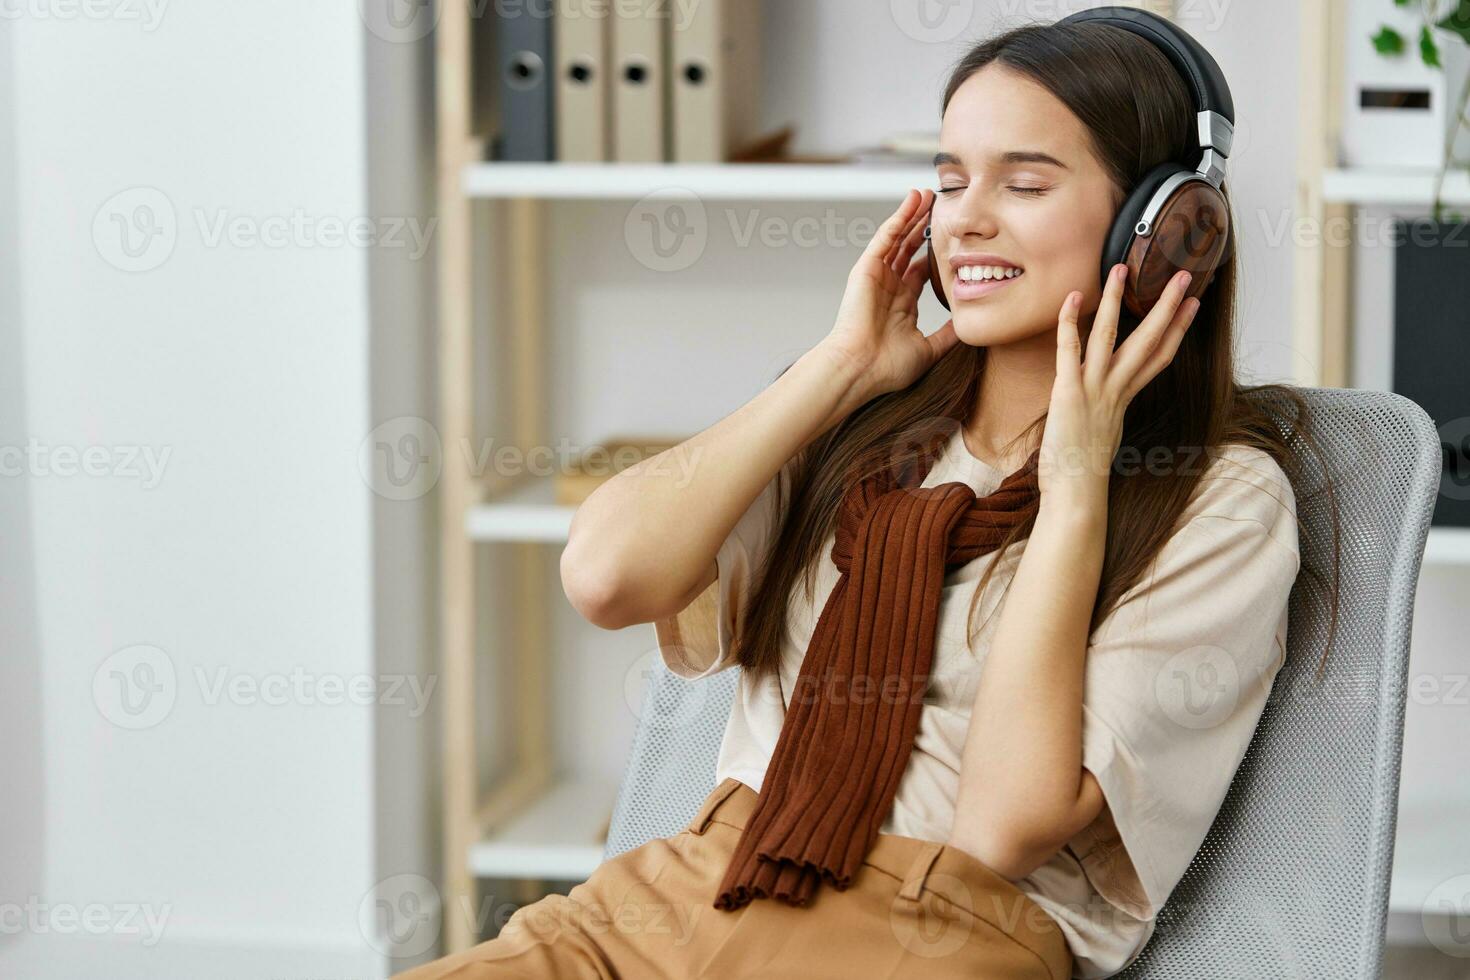 sonrisa niña contento estilo de vida silla auriculares música meditación Adolescente teléfono foto